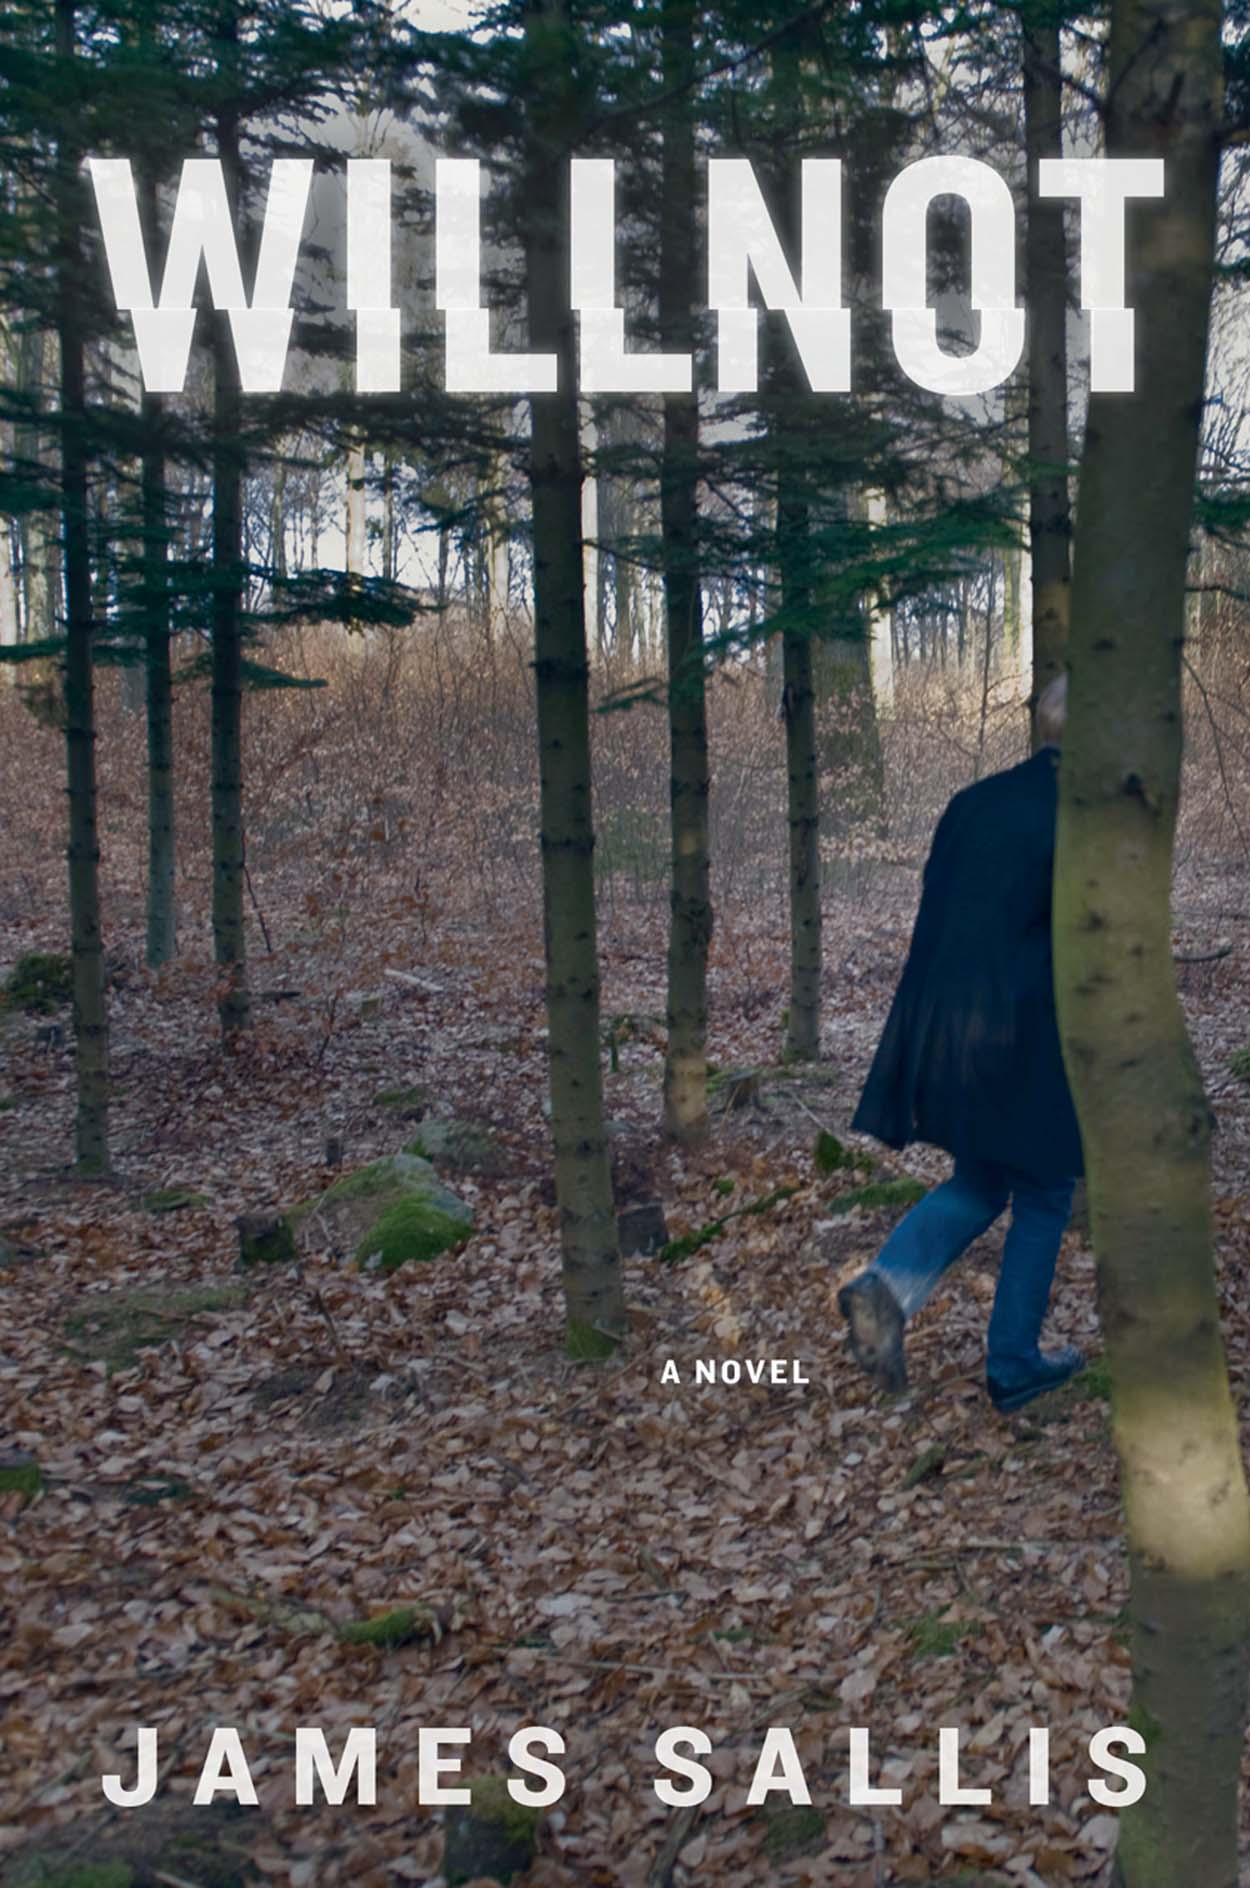 Willnot (2016) by James Sallis